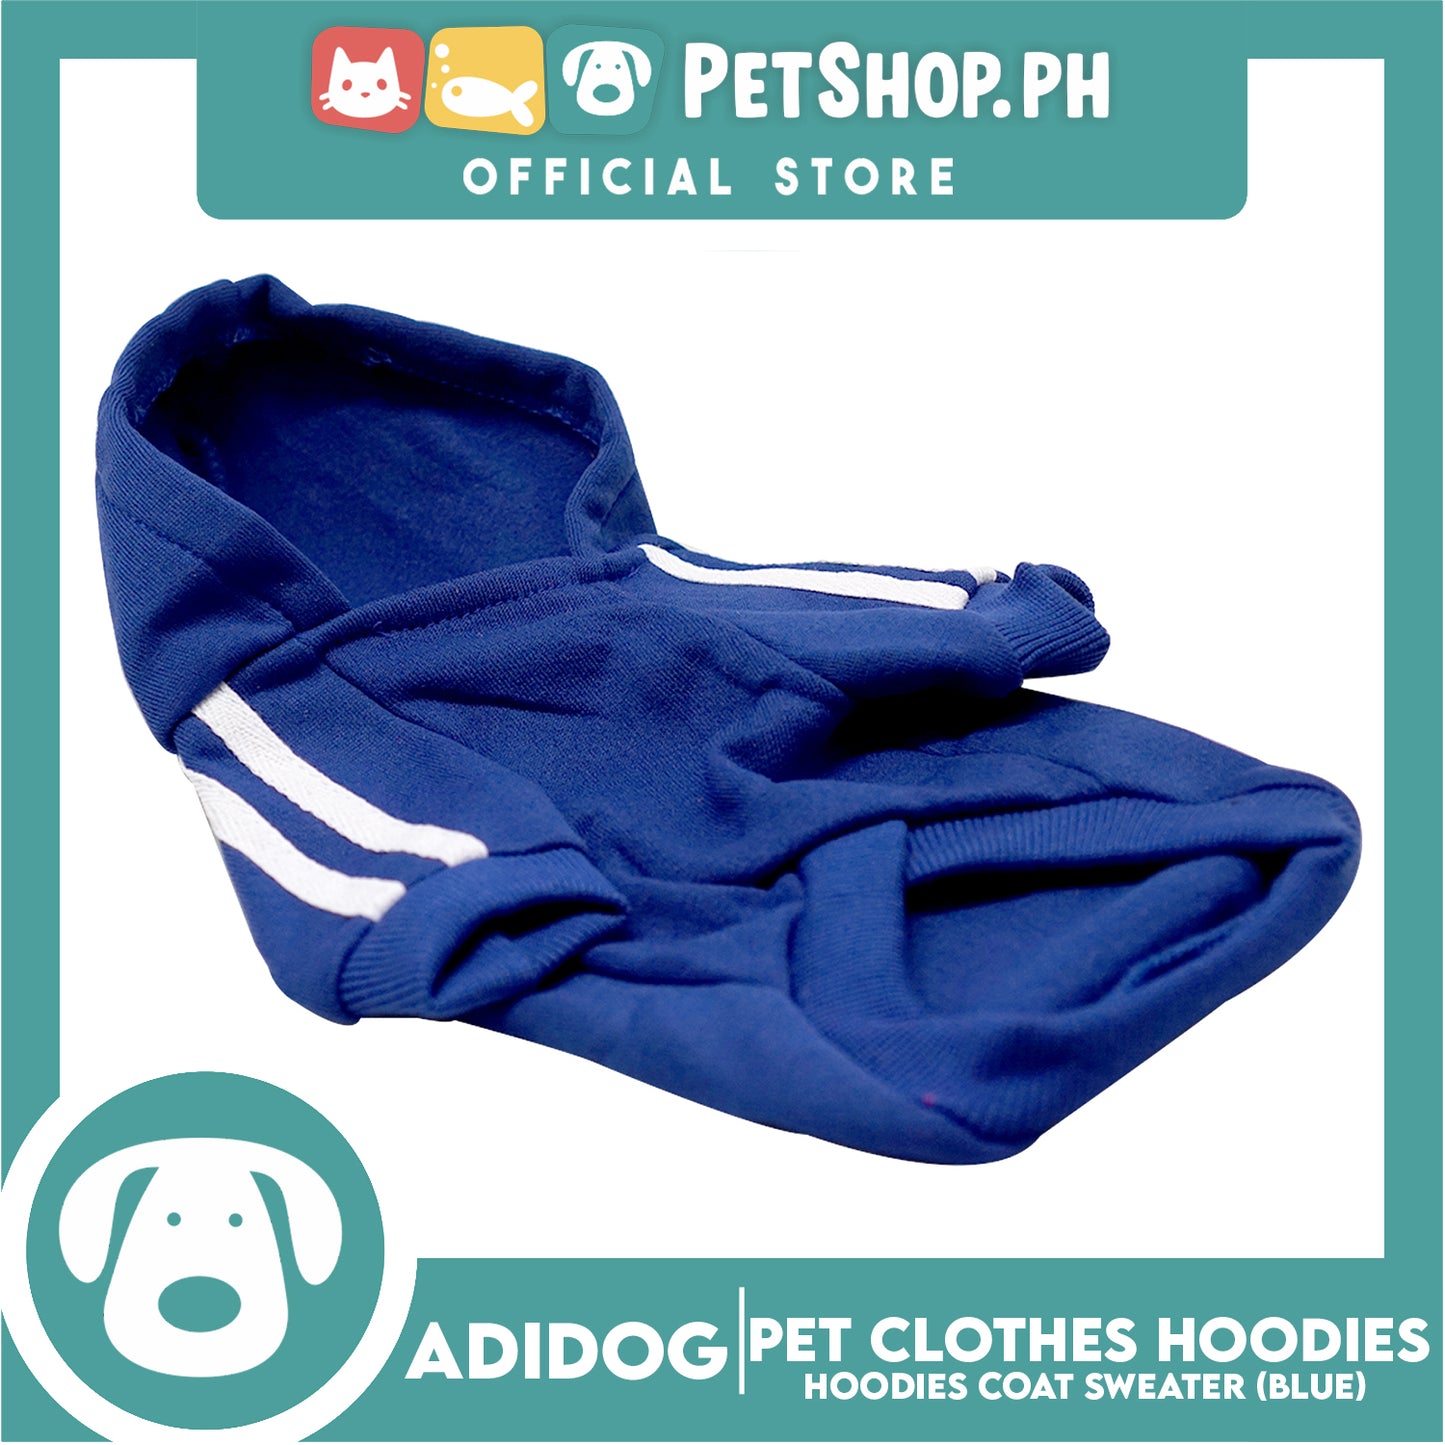 Adidog Pet Clothes Hoodies, Dog Winter Hoodies Apparel Puppy Cute Warm Hoodies Coat Sweater (Blue) (XS)